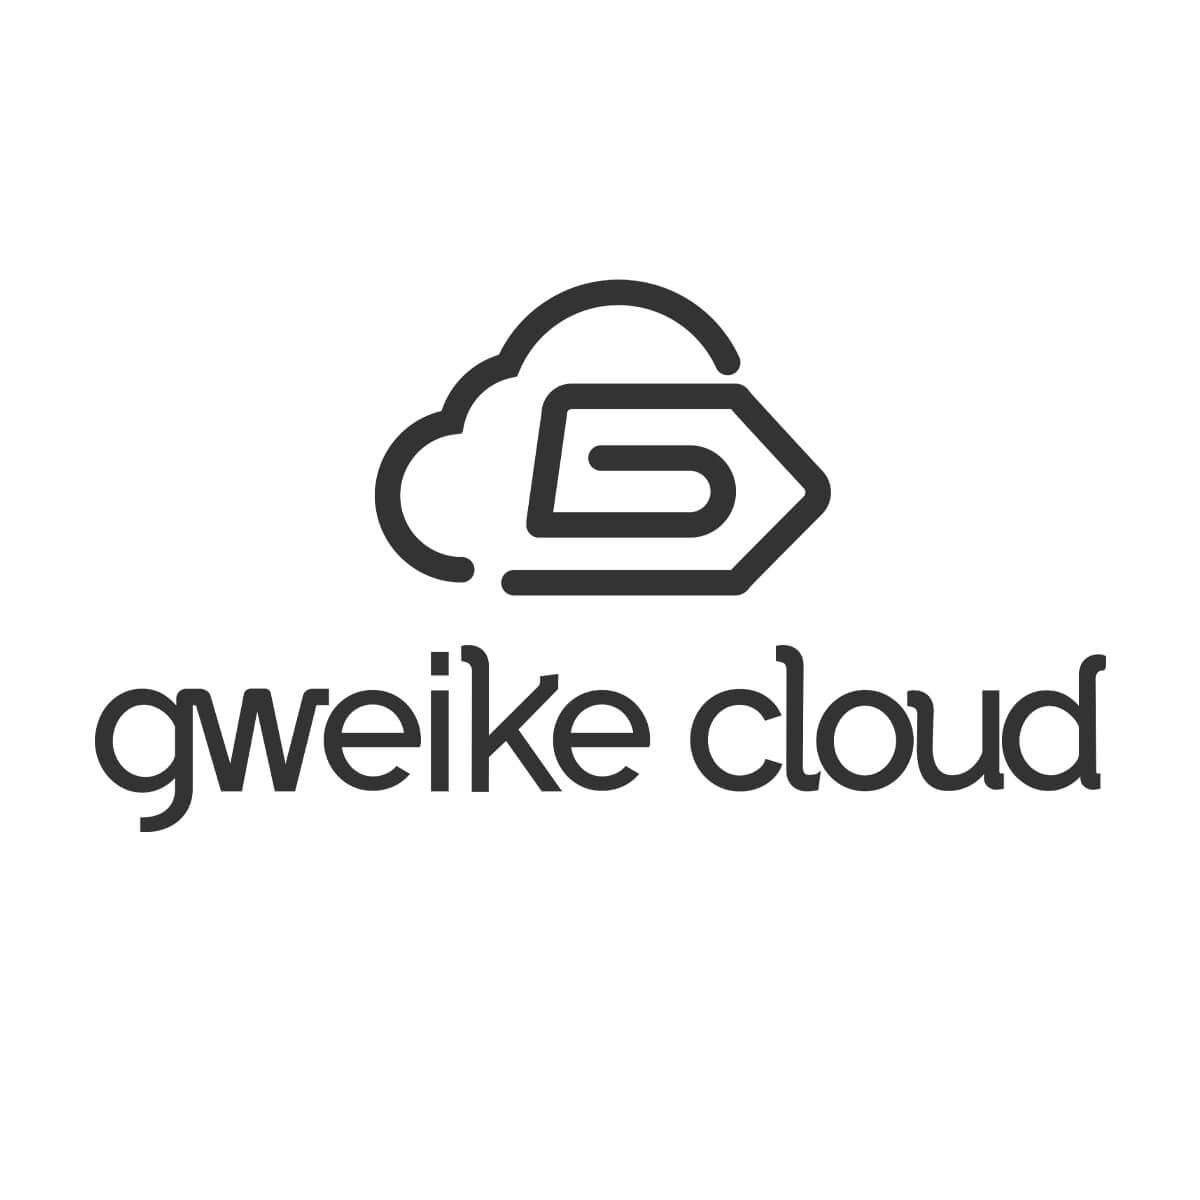 gweikecloud Logo